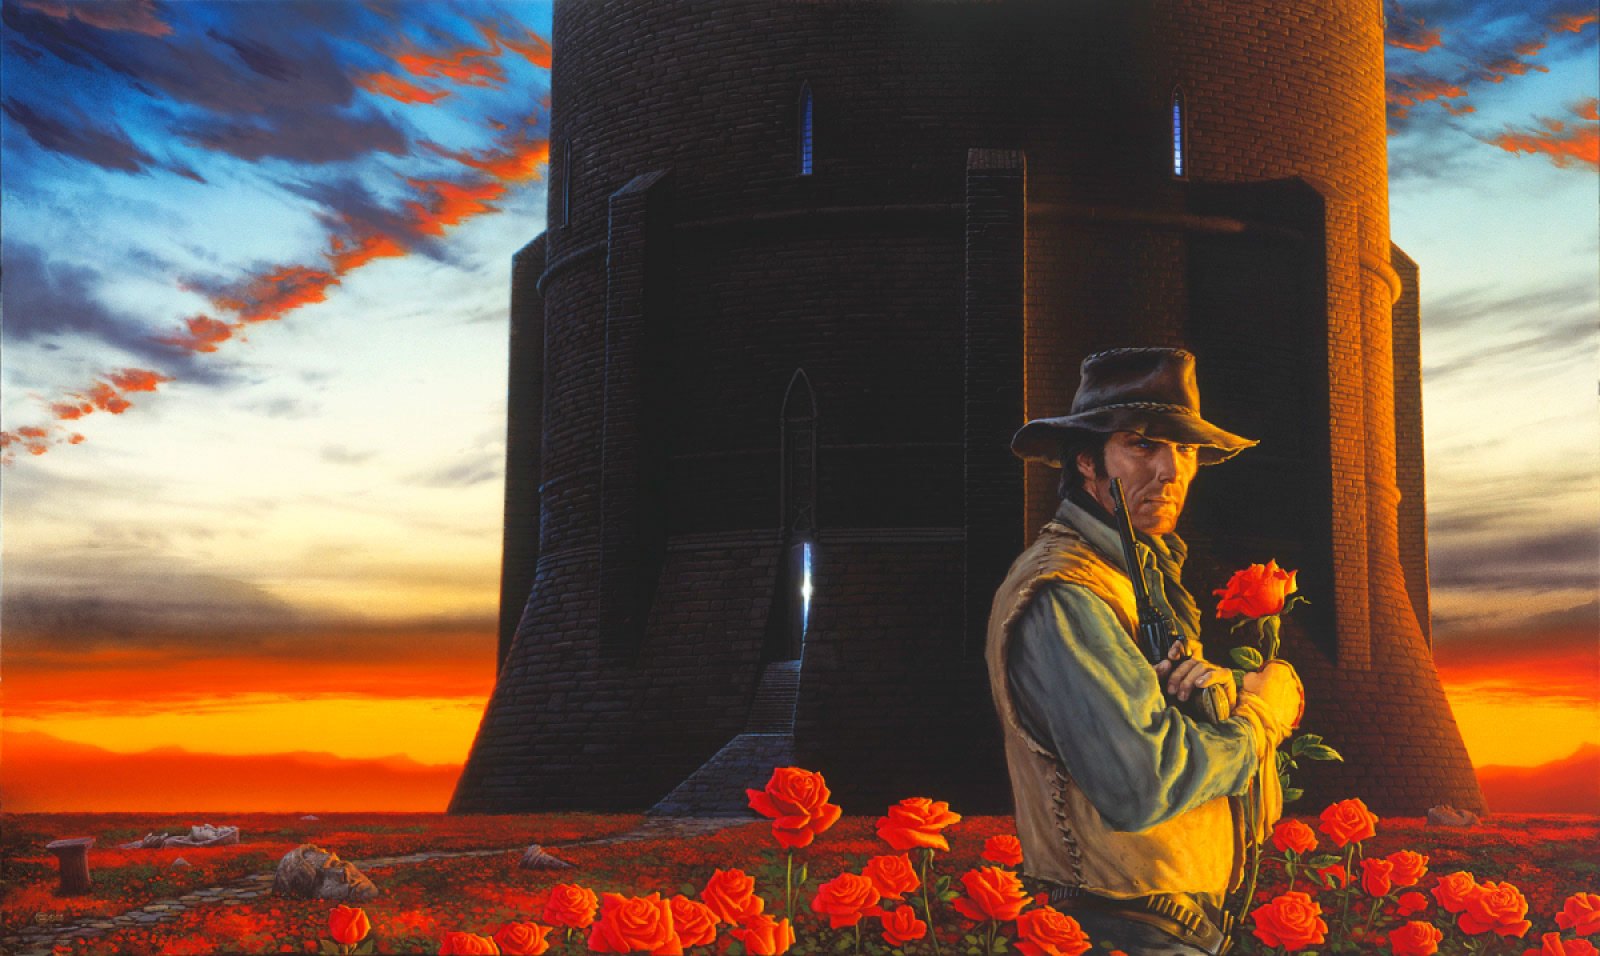 Cover art for Stephen King's The Dark Tower